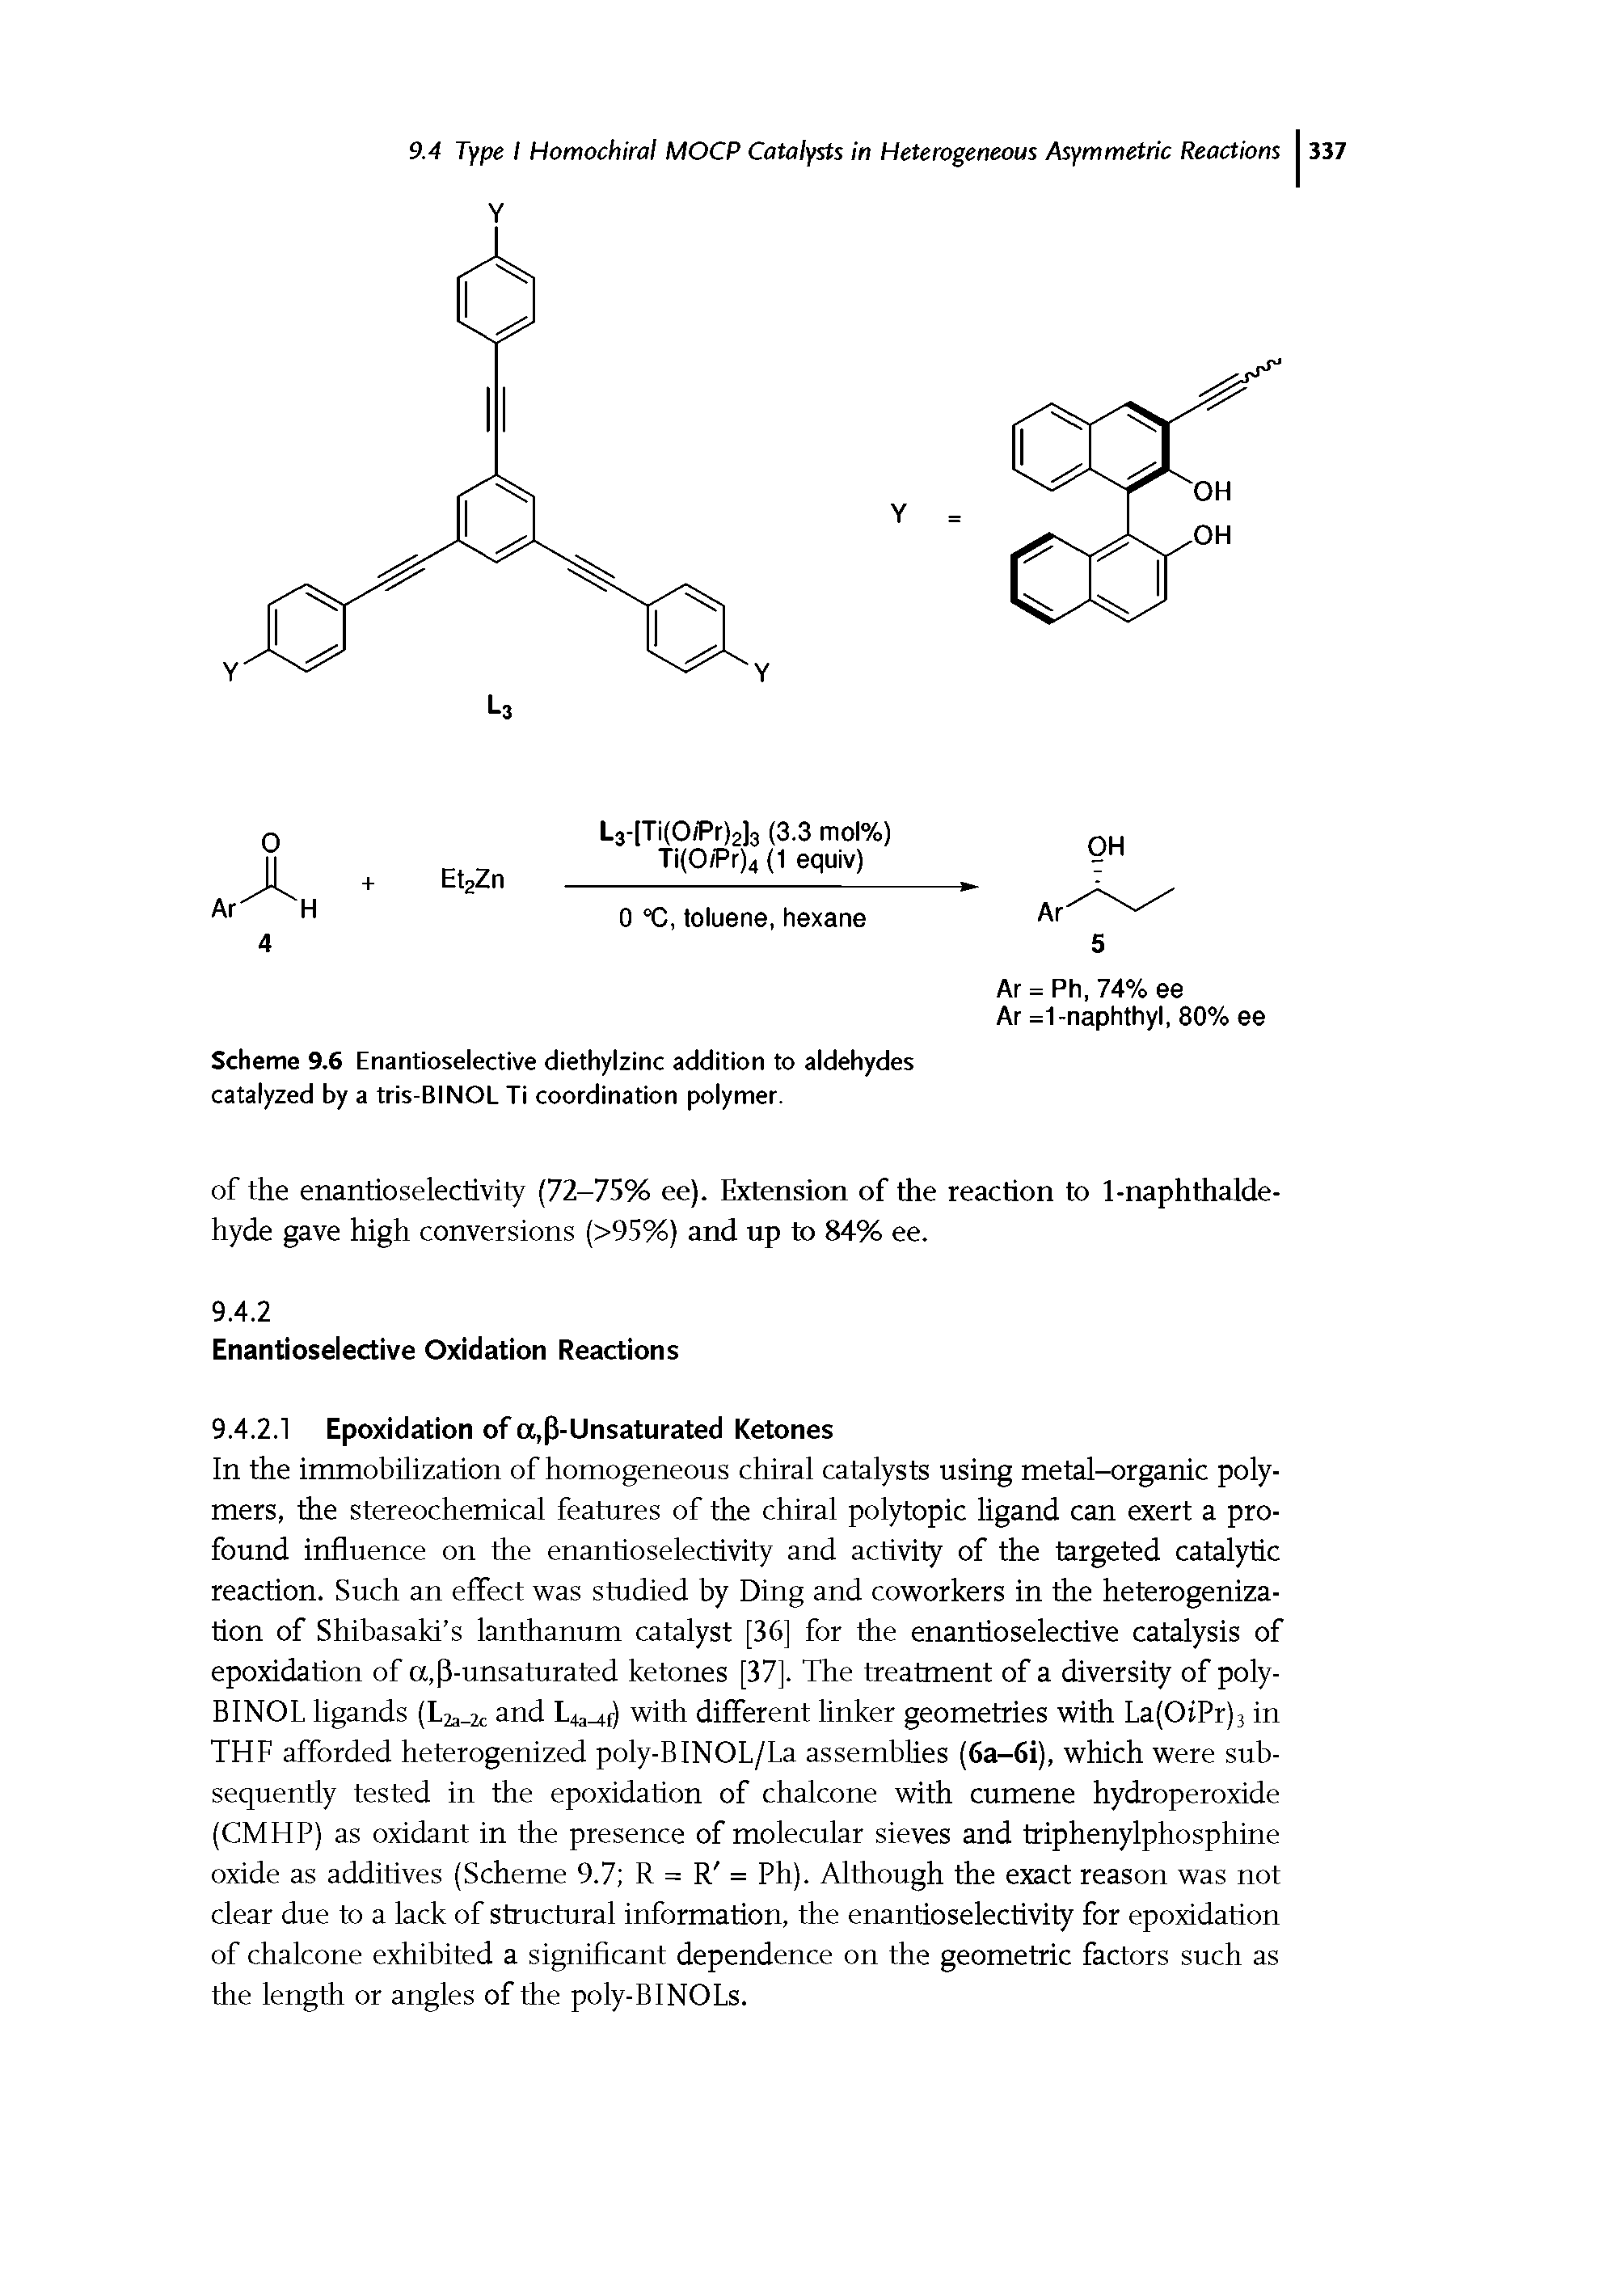 Scheme 9.6 Enantioselective diethylzinc addition to aldehydes catalyzed by a tris-BINOL Ti coordination polymer.